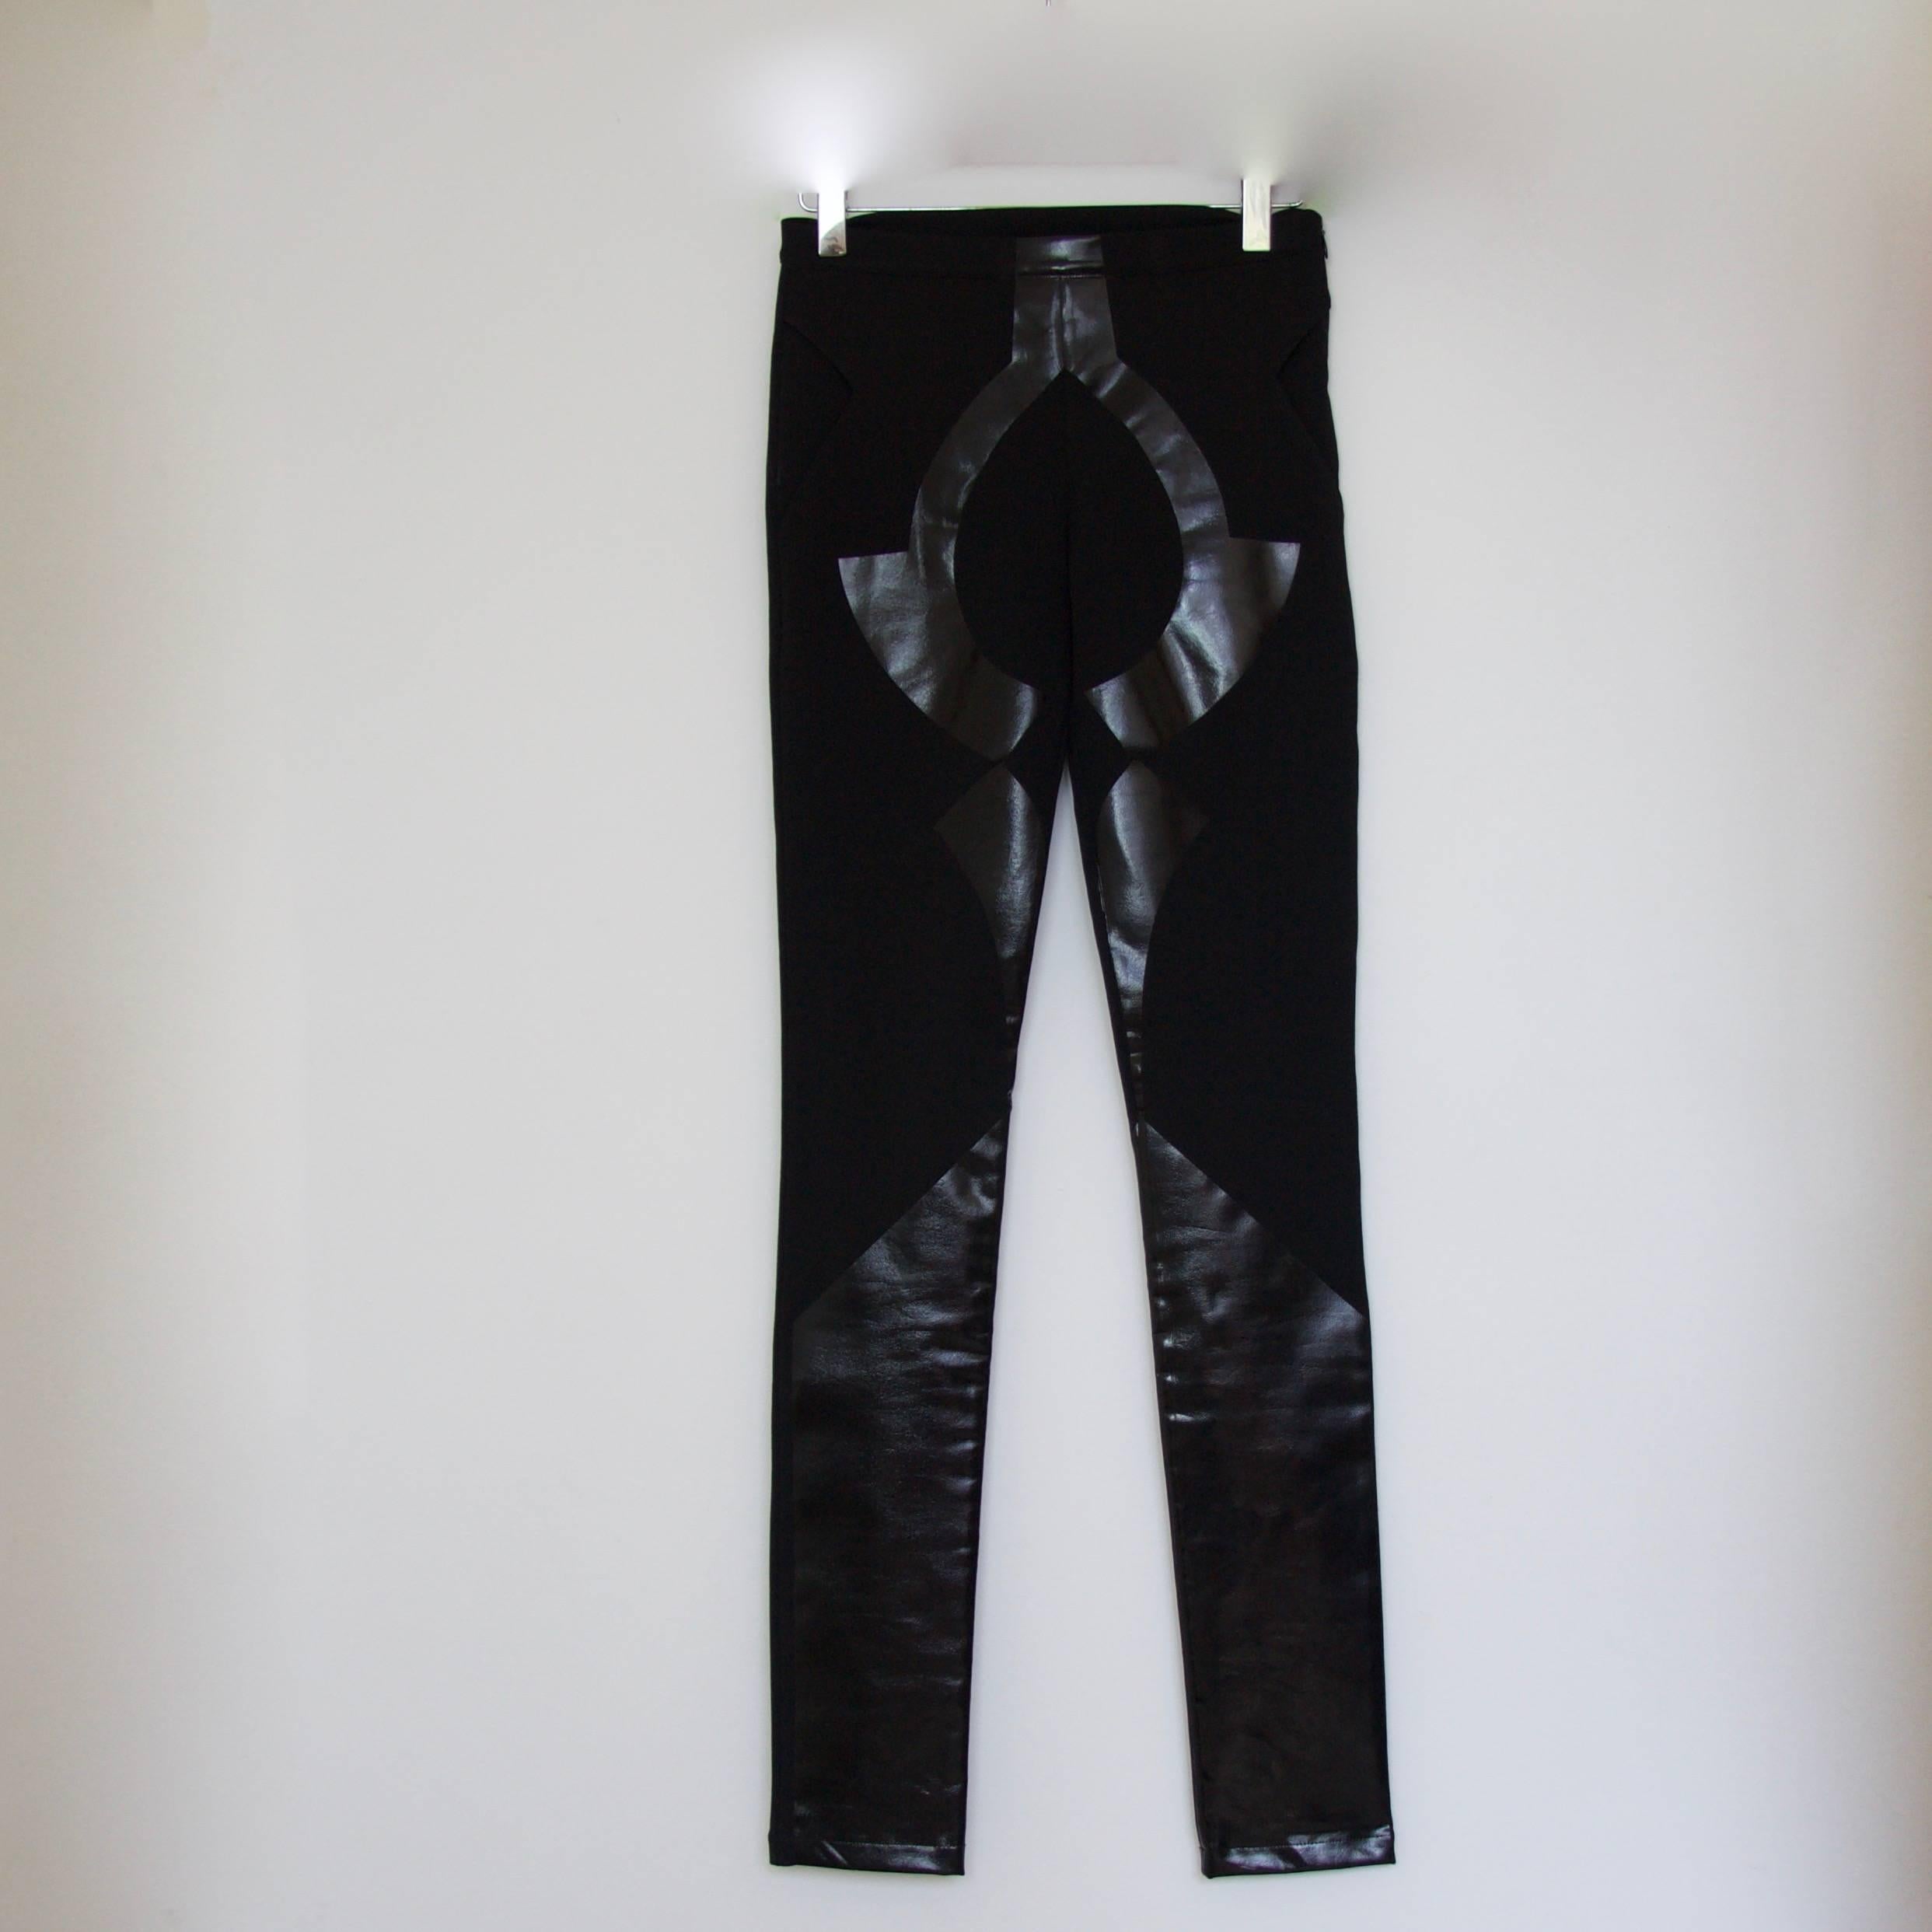 Super skinny Givenchy logo detail trouser

Waist width: 32.0 cm
Leg length: 105.0 cm